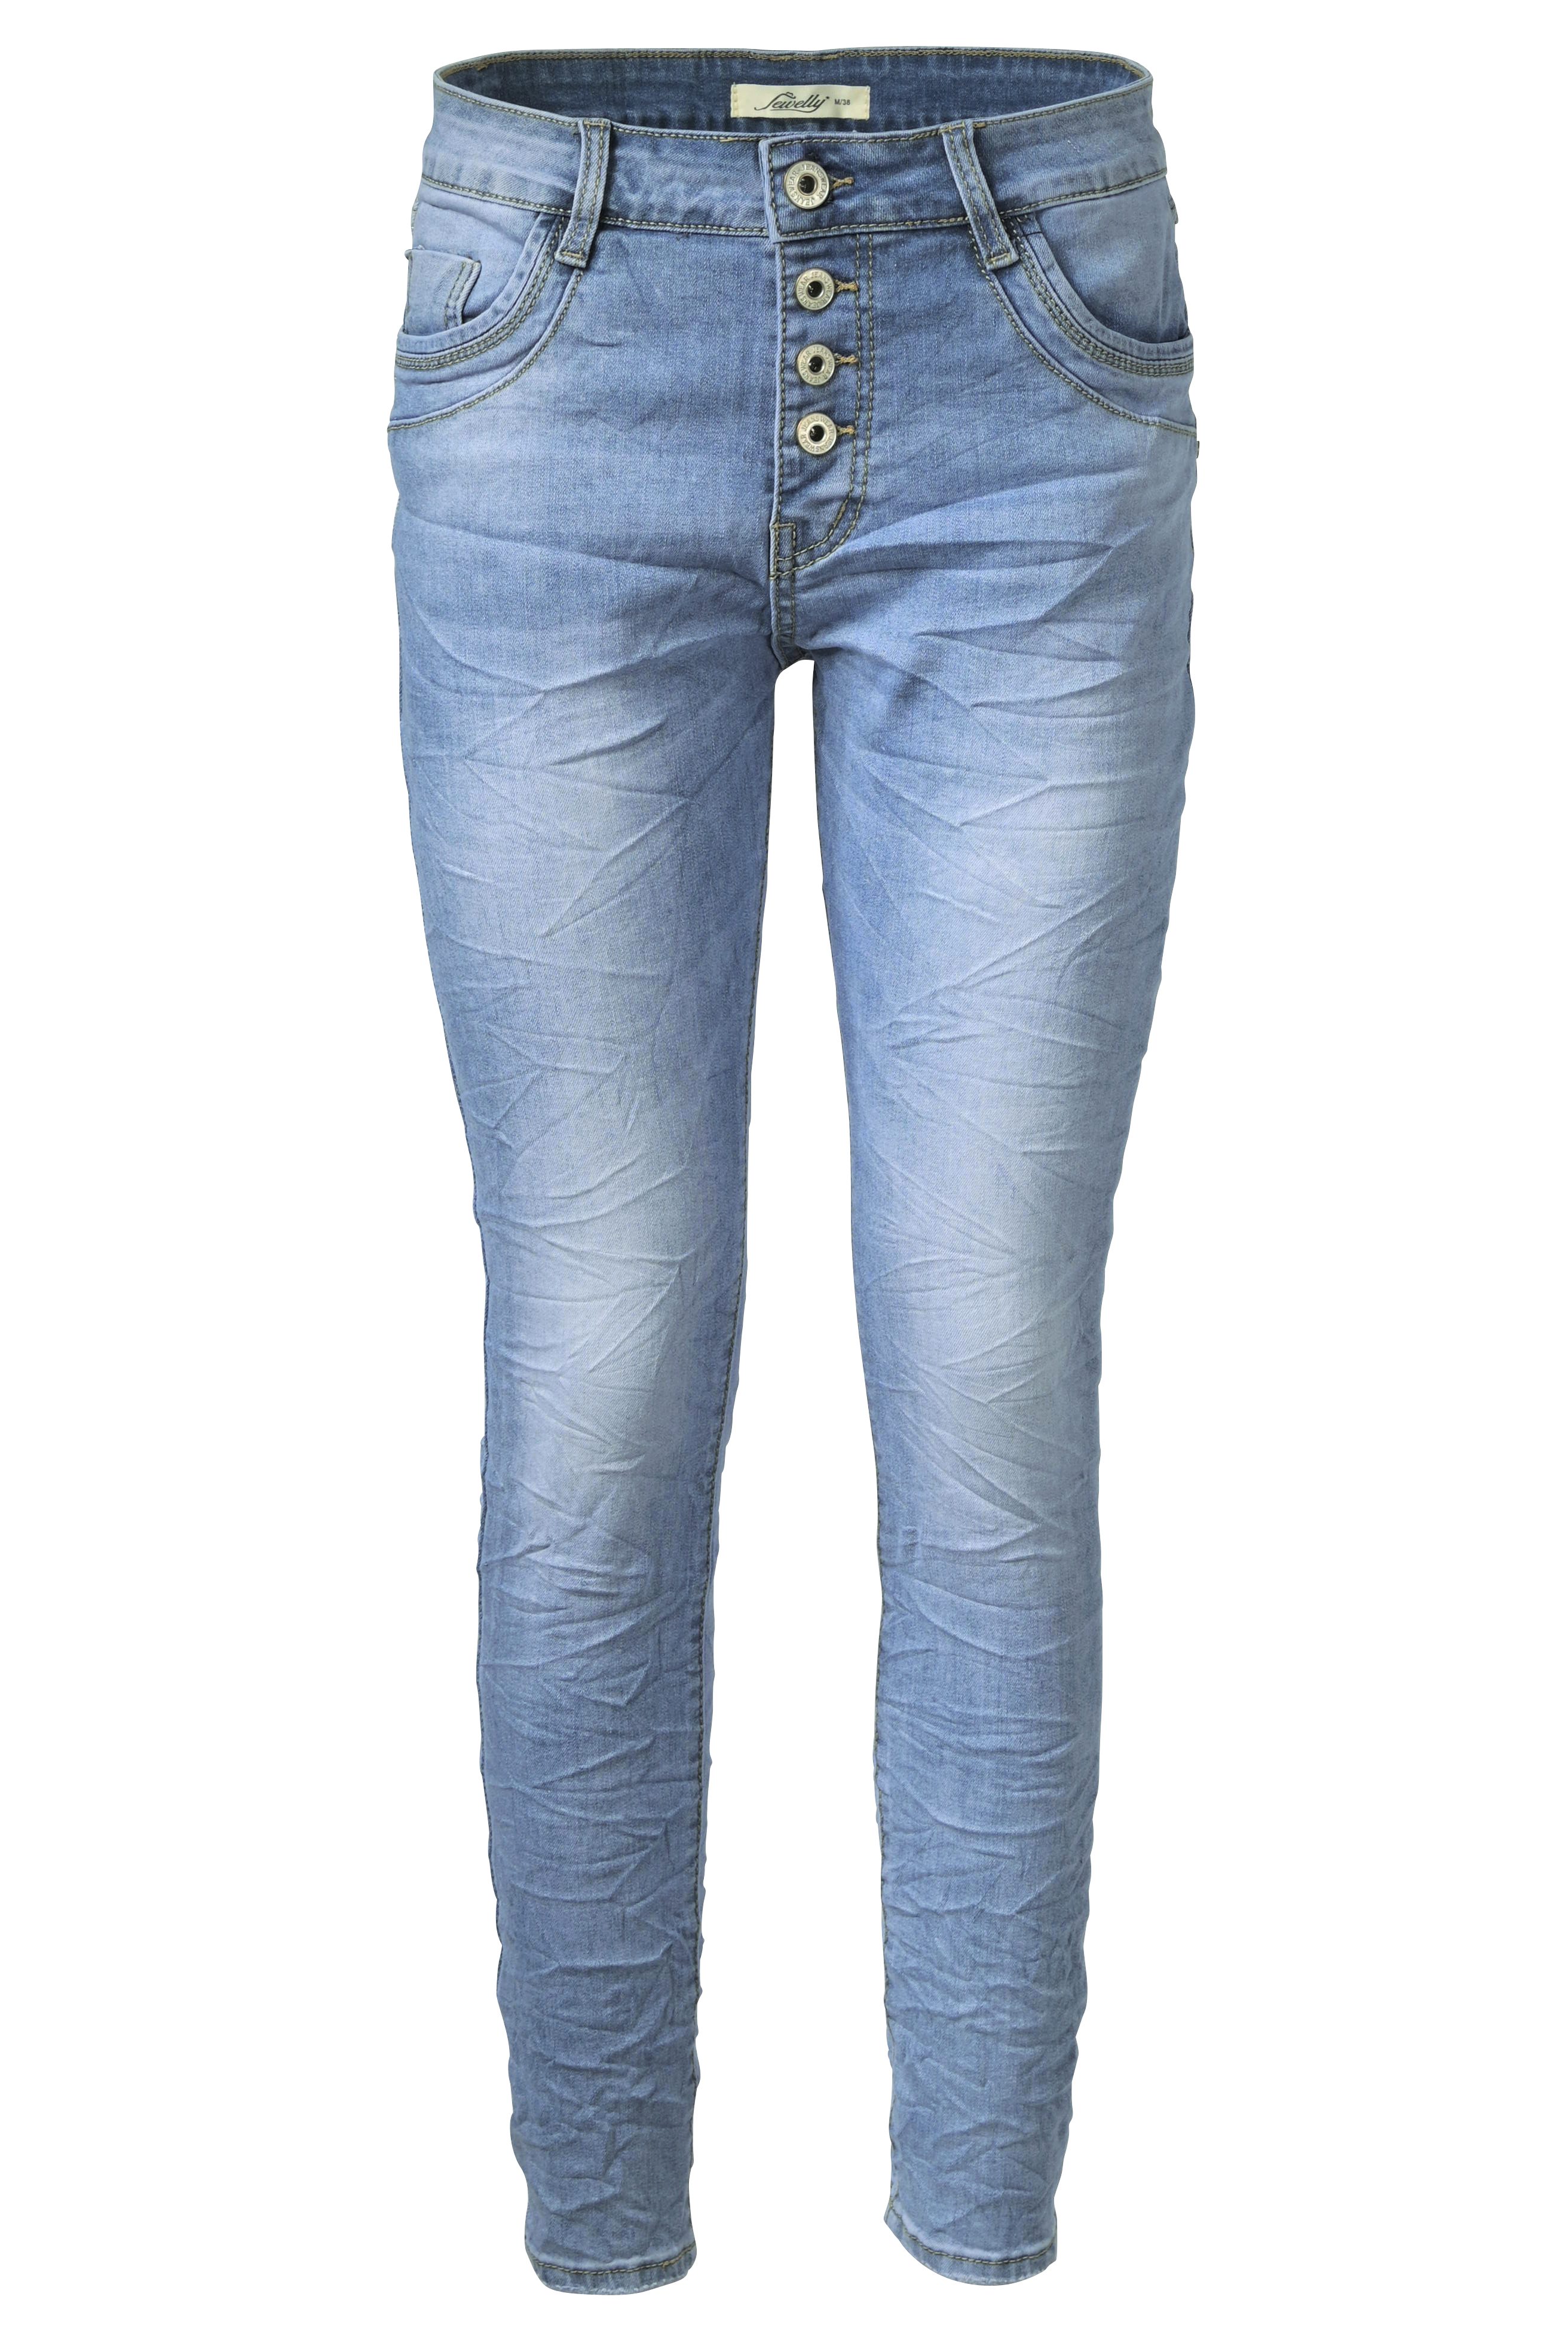 Jewelly Jeans Stretch im Five-Pocket Regular-fit-Jeans Crash-Look